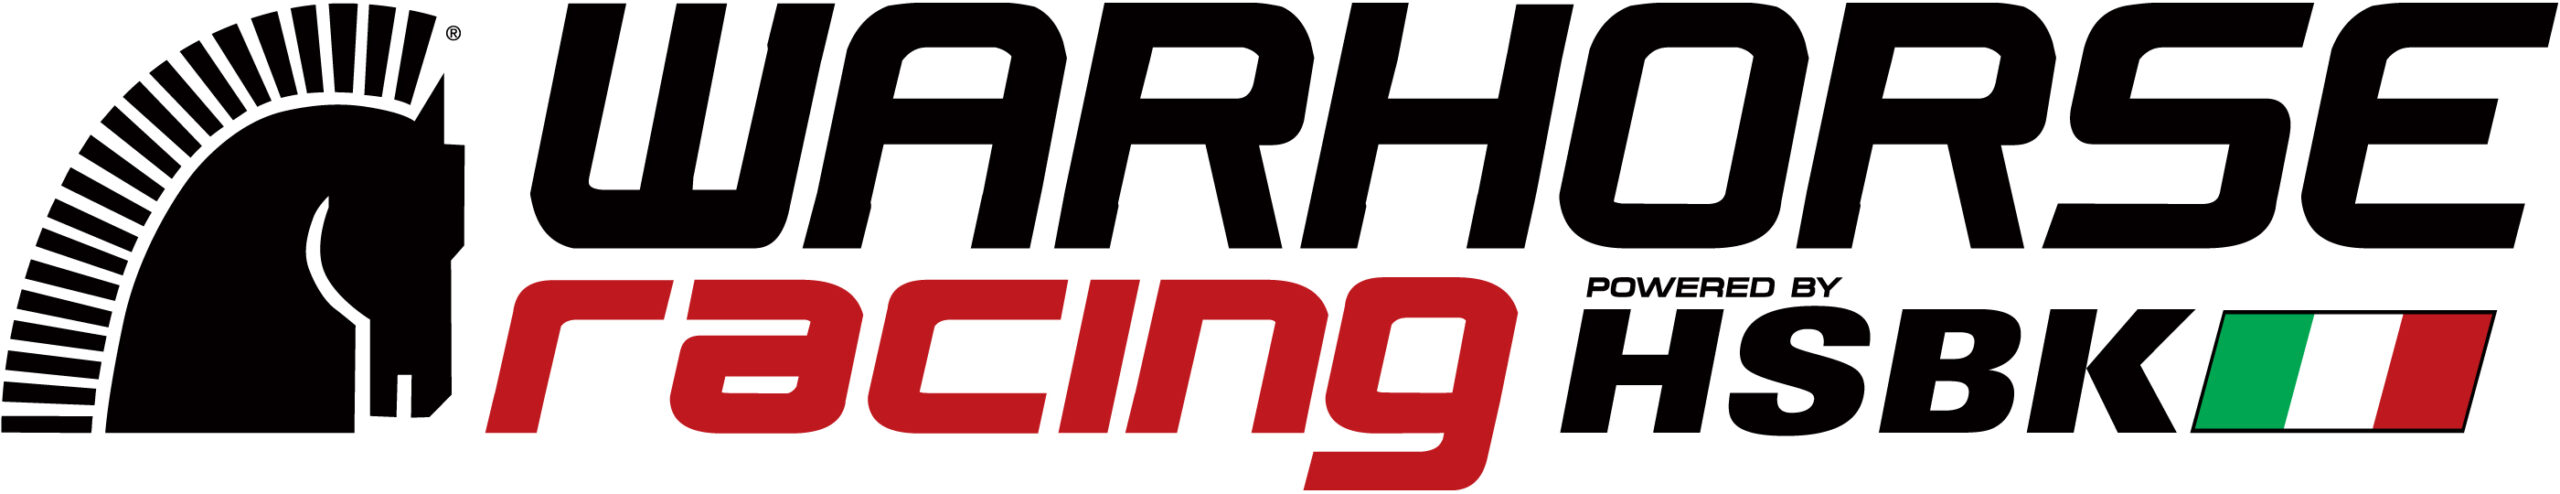 Three industry leaders unite to create Warhorse Racing powered by HSBK